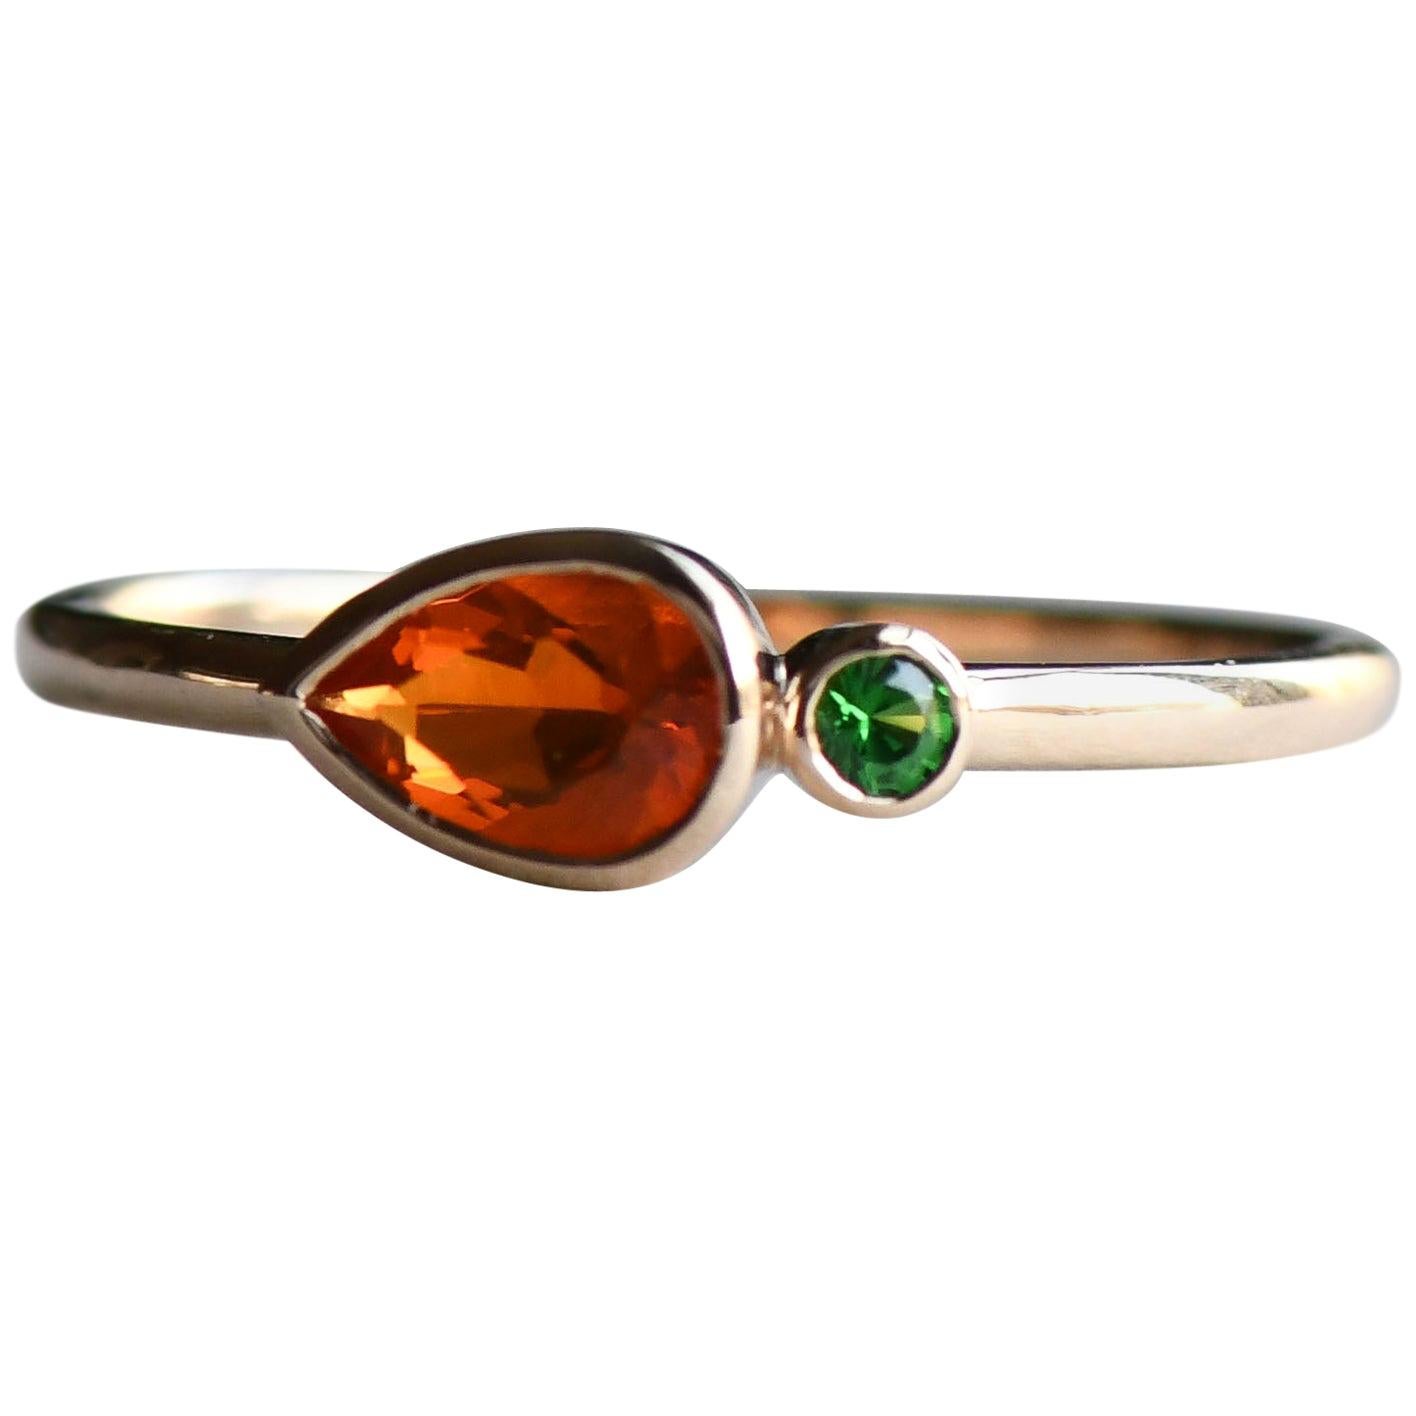 For Sale:  18 Karat Mexican Fire Opal with Tsavorite Garnet Ring, Carrot Ring